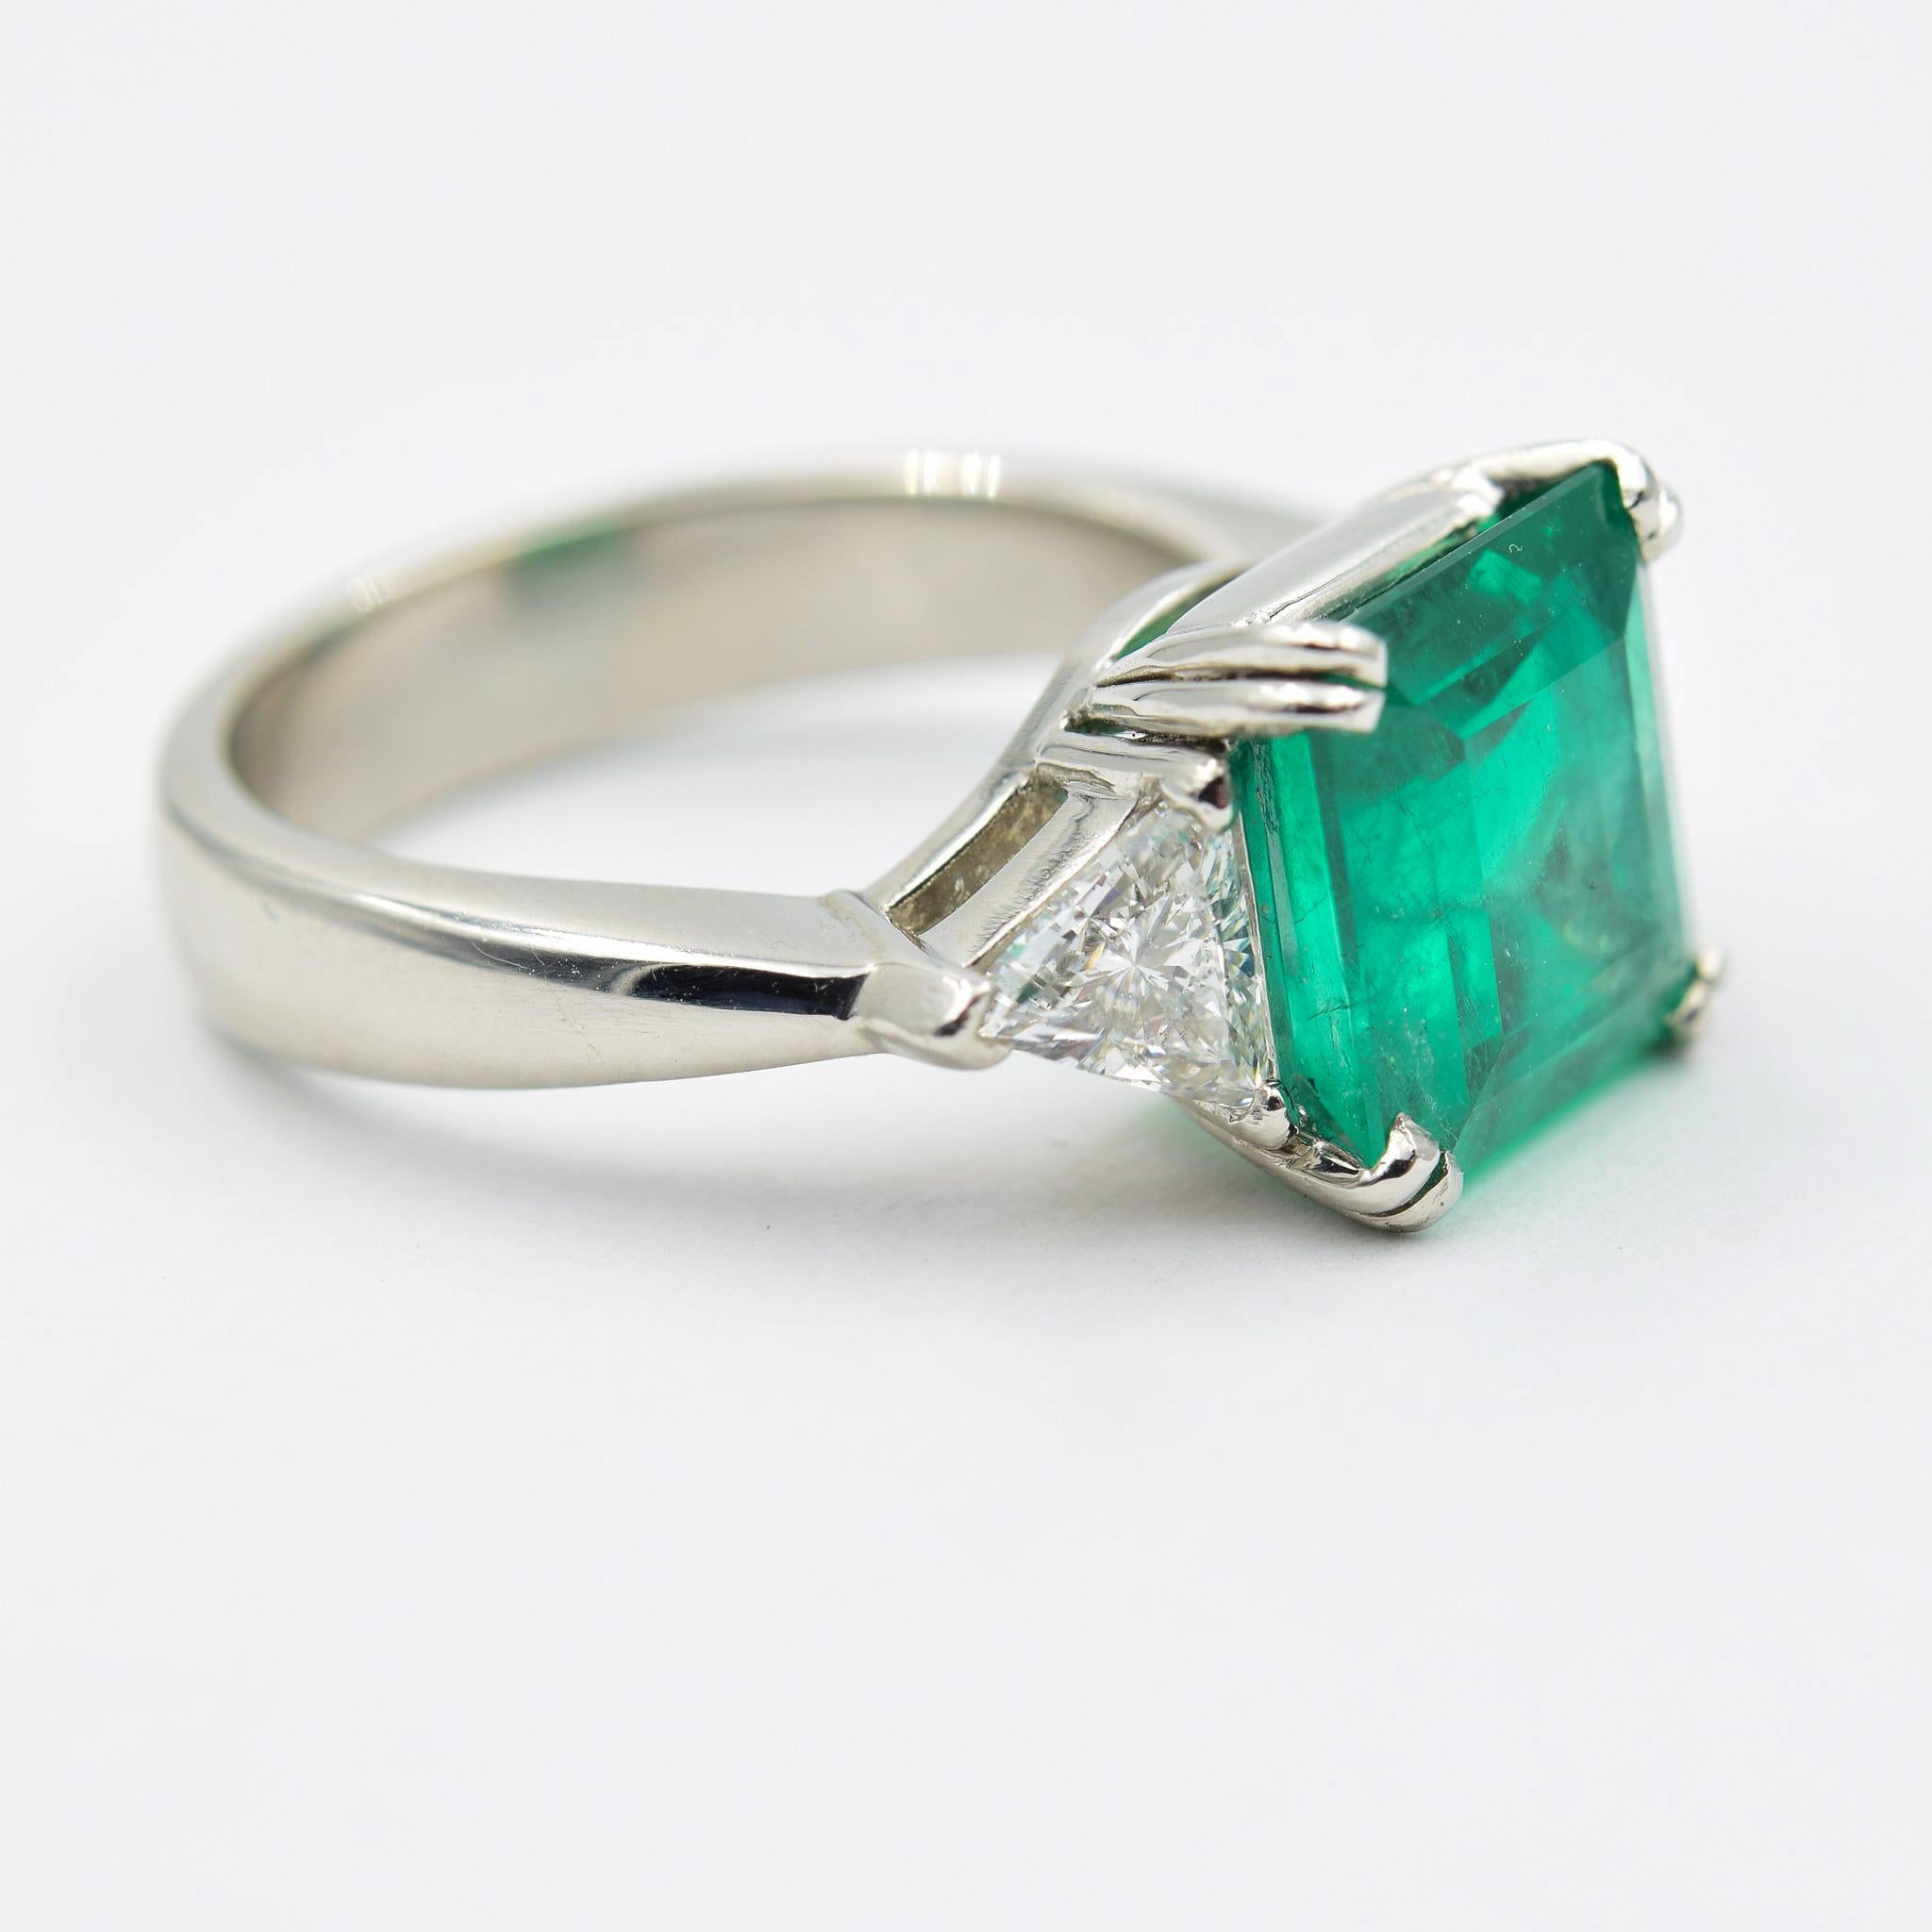 Square Cut 3.70 Carat Emerald & Diamond Ring in Platinum with Trillion Cut Sides